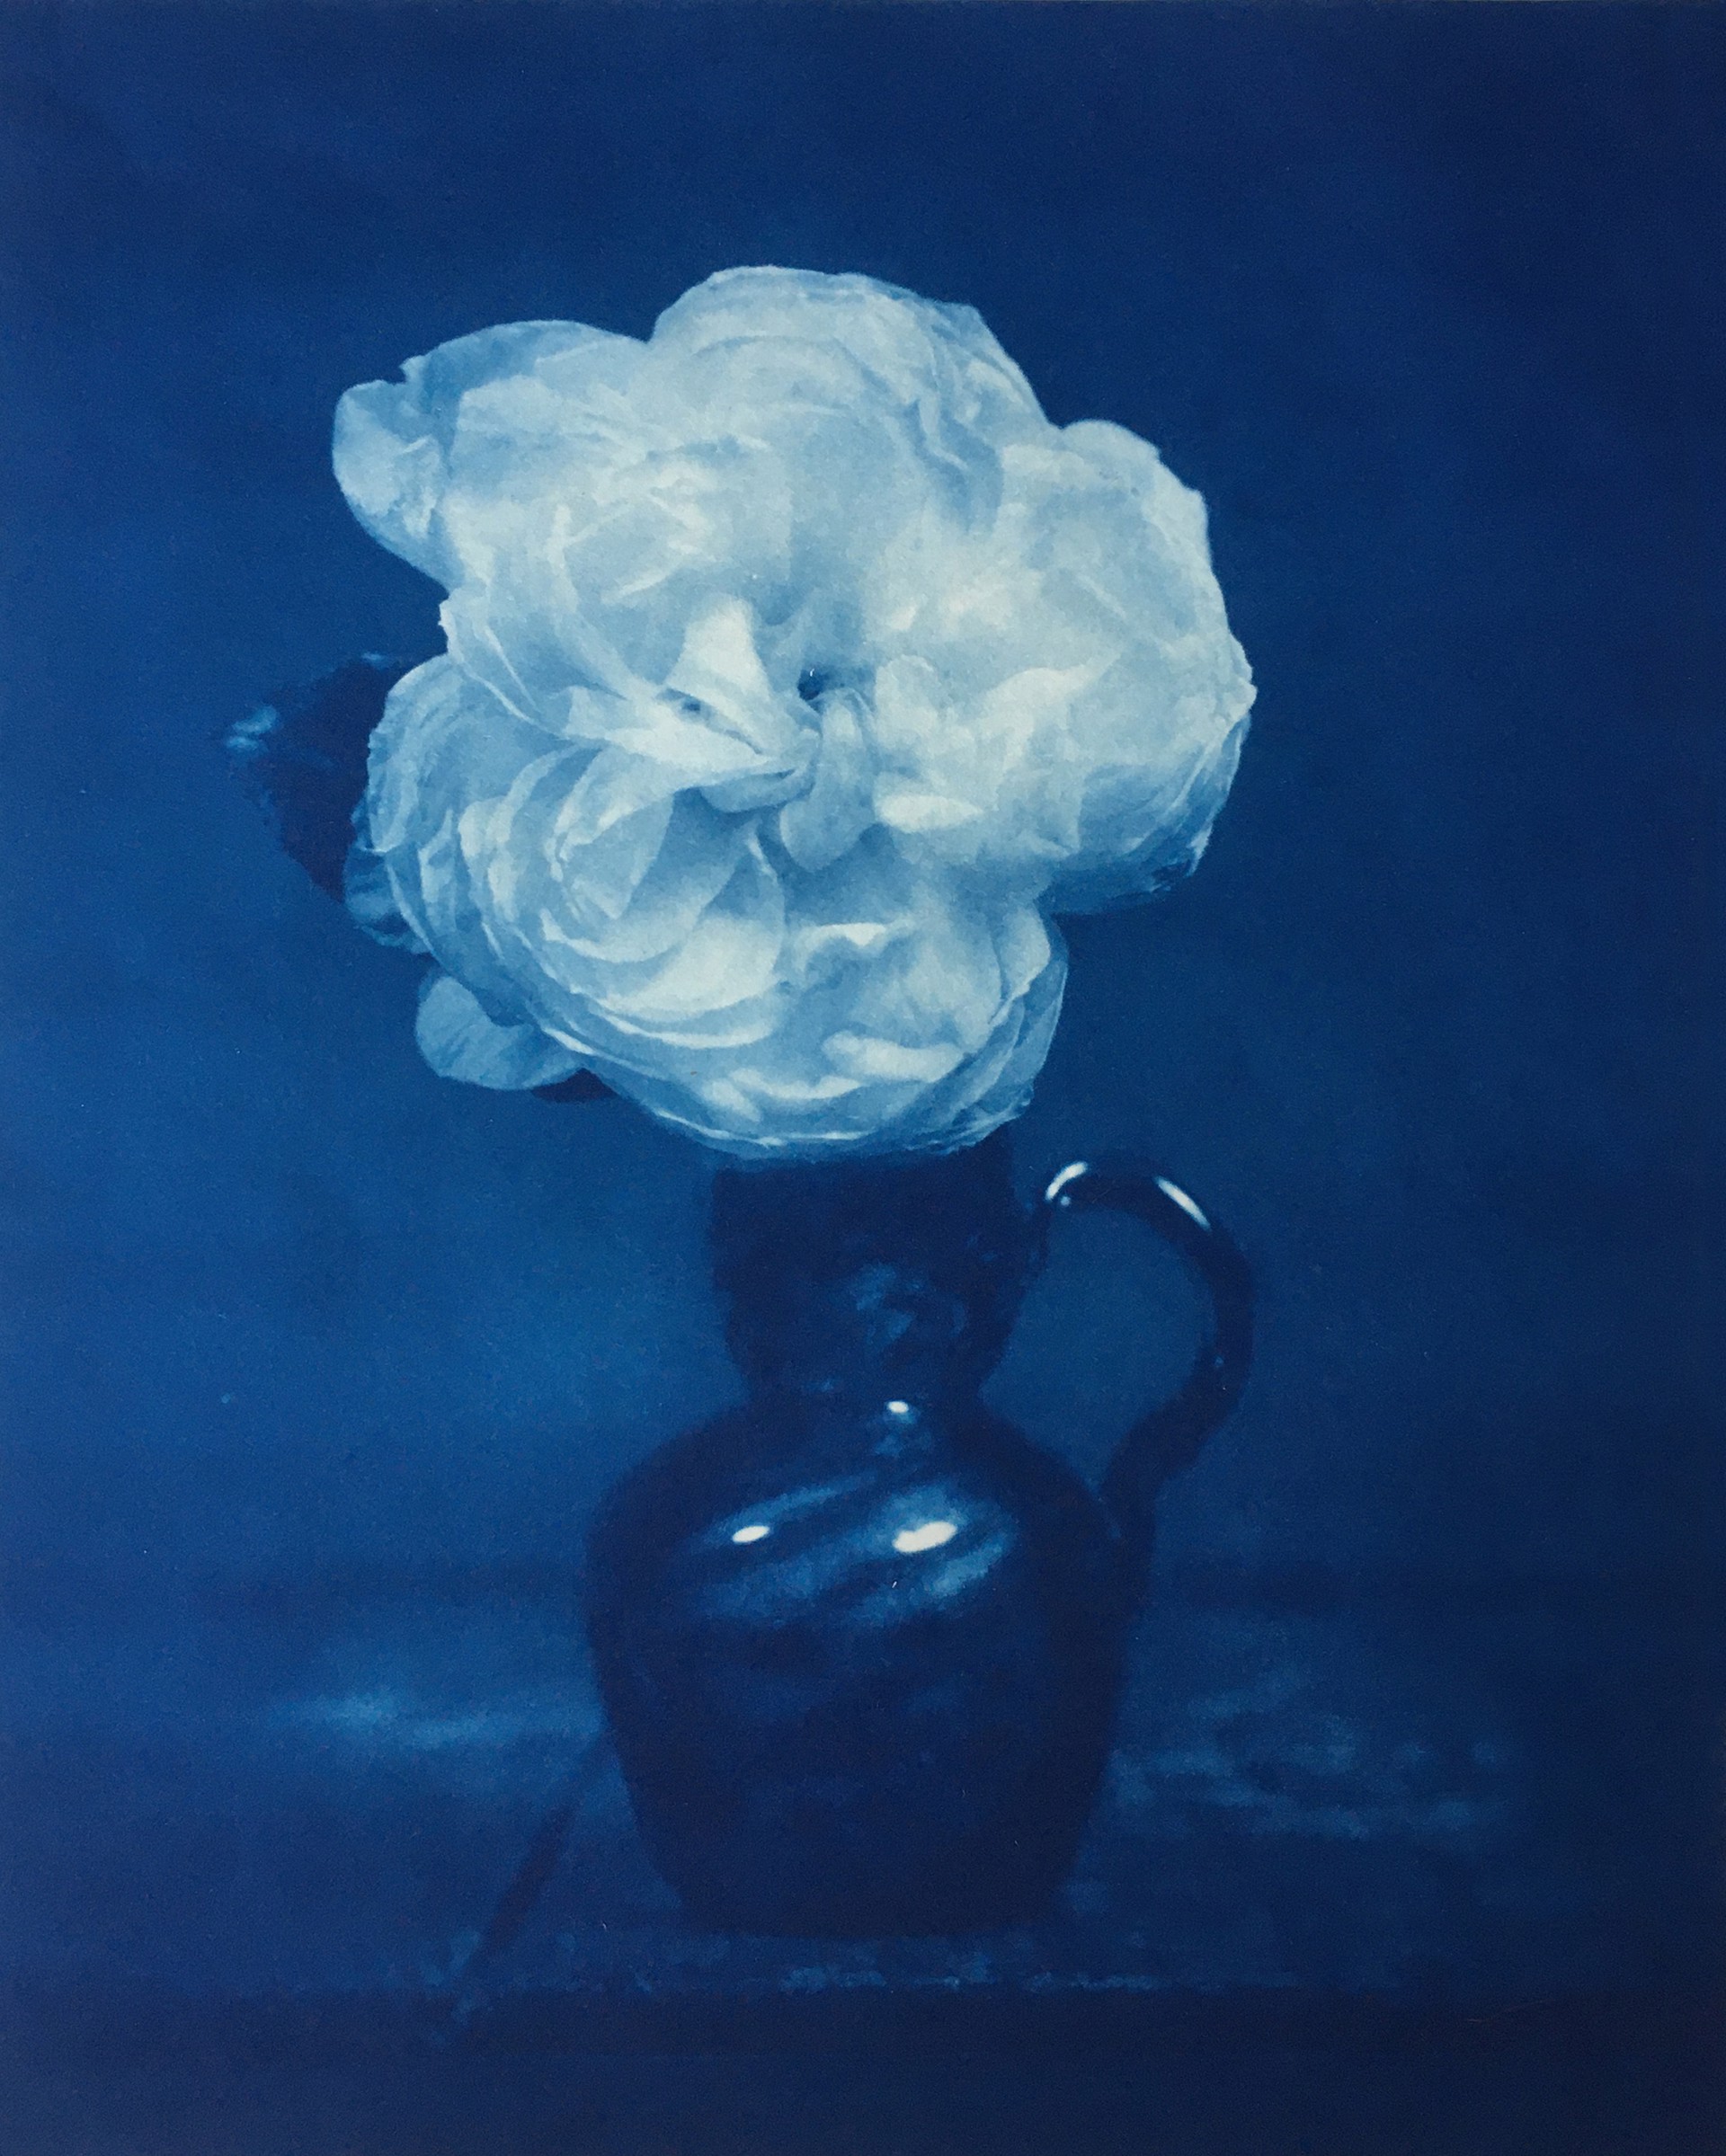 Rose in a Blue Glass Vase by David Sokosh